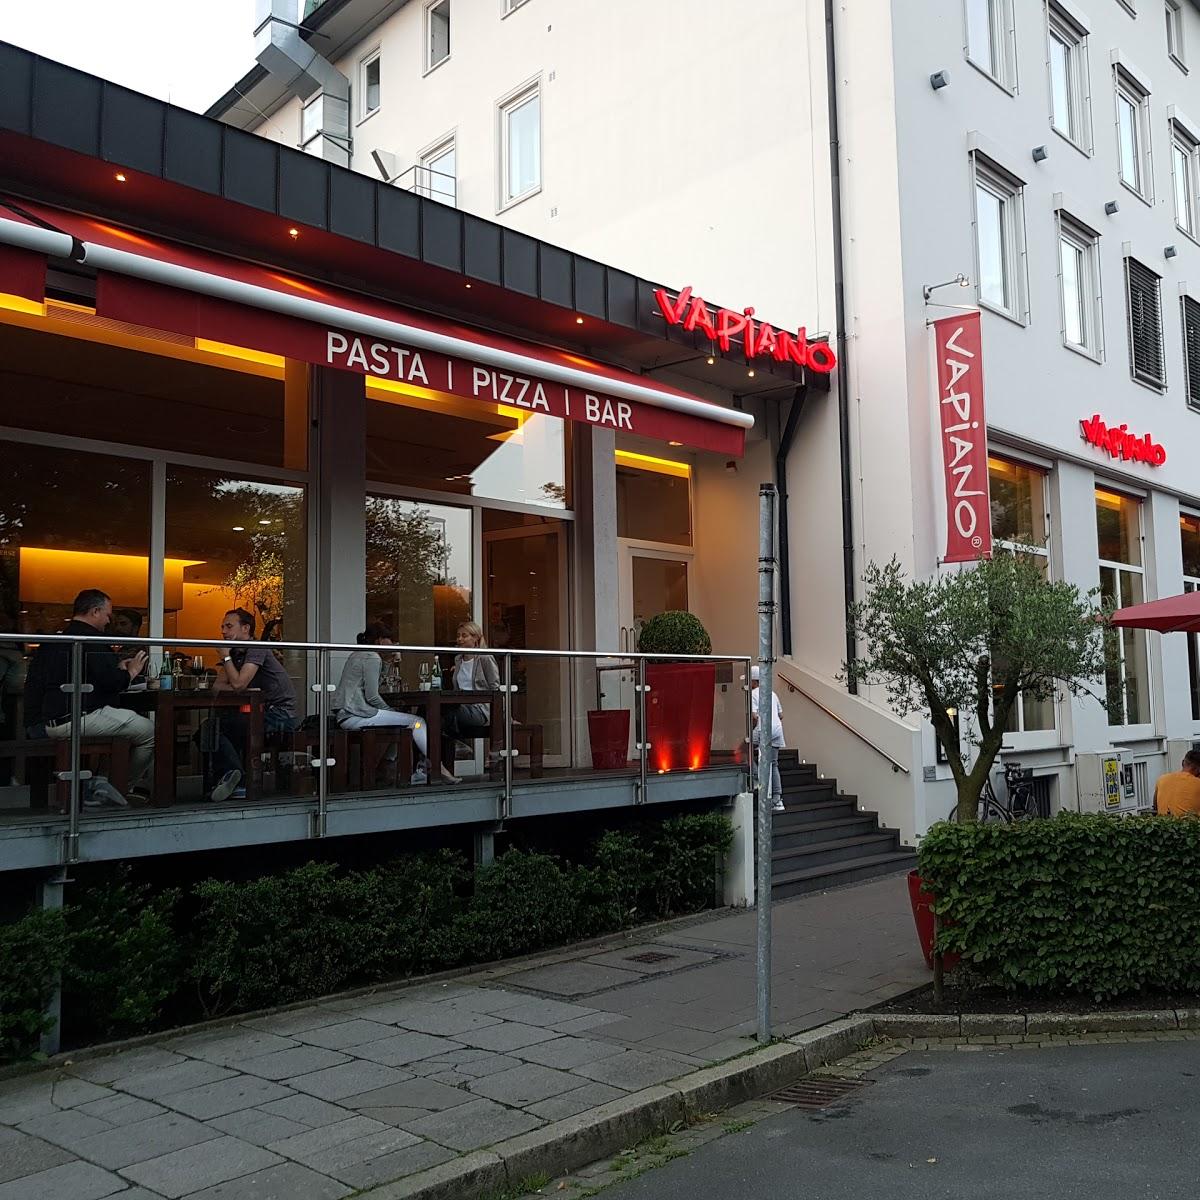 Restaurant "VAPIANO" in  Oldenburg